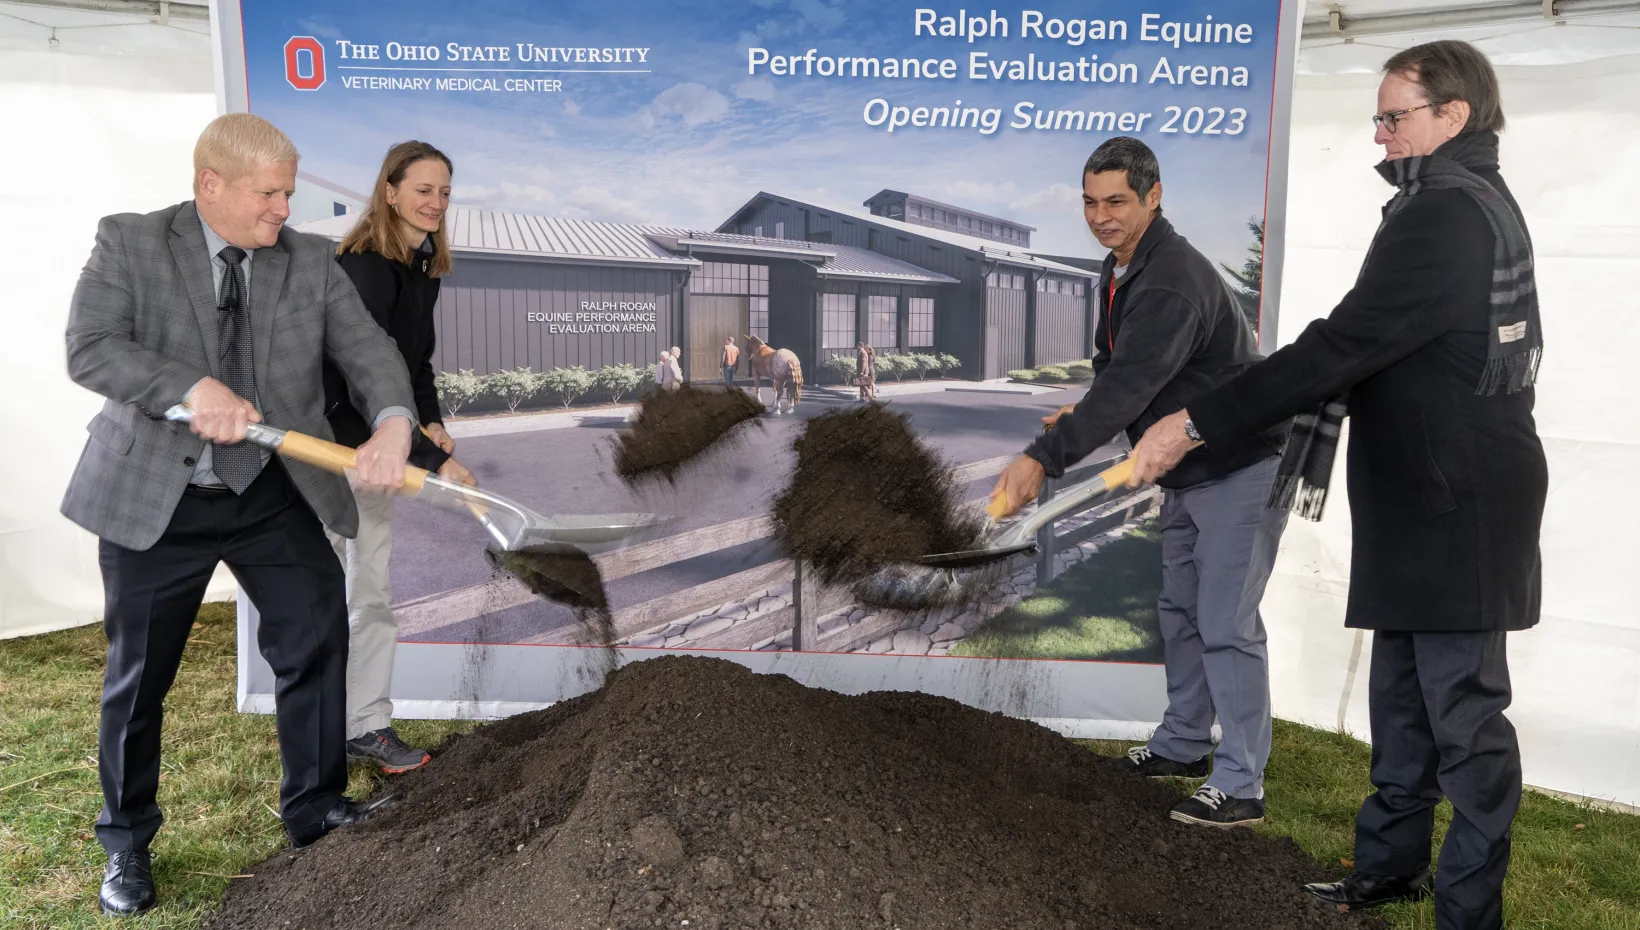 Celebratory groundbreaking posed shot for the Ralph Rogan Equine Performance Evaluation Arena